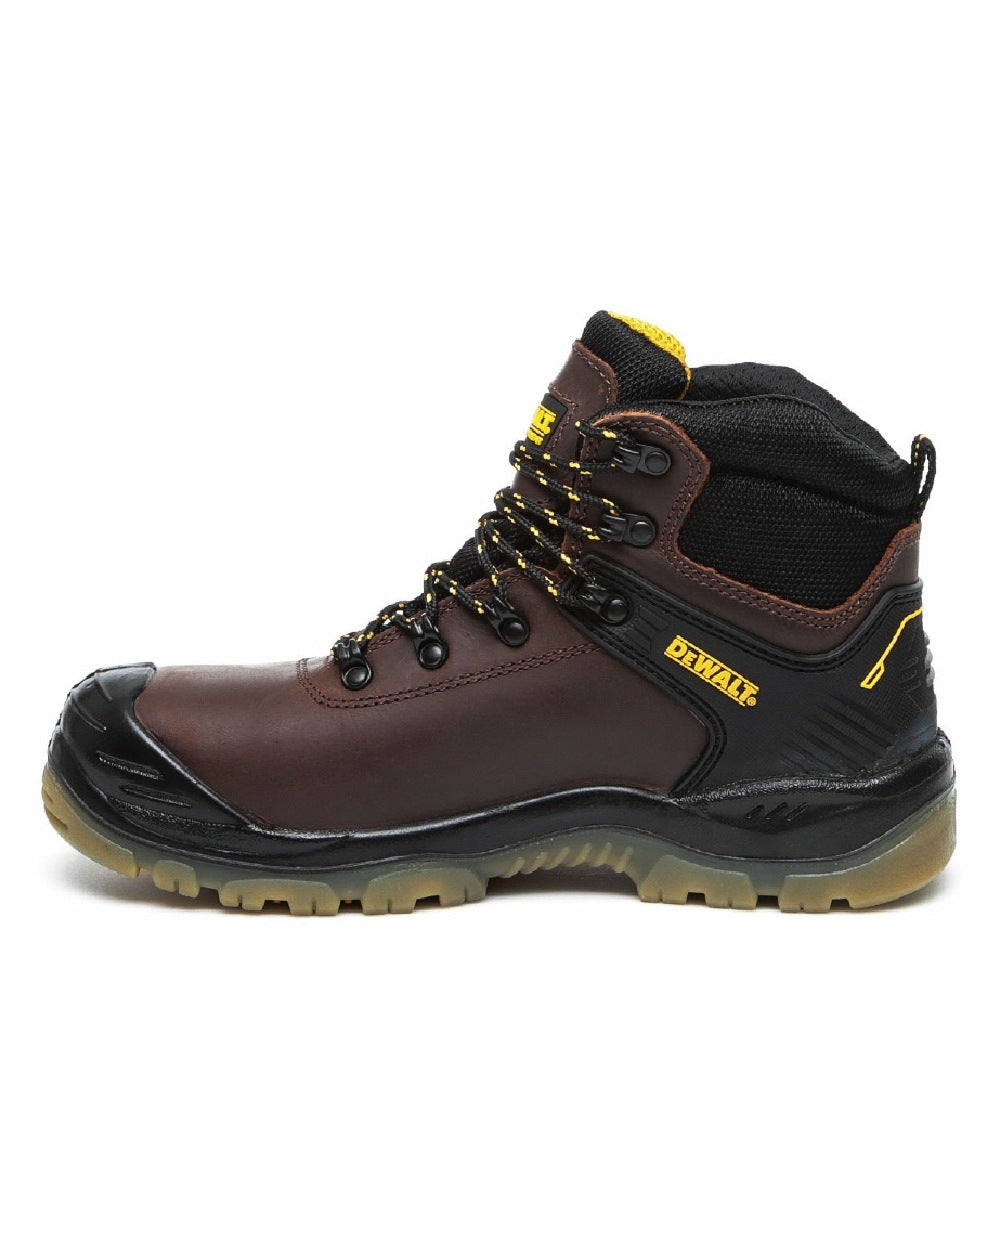 DeWalt Newark Waterproof Safety Hiker Boots in Brown 